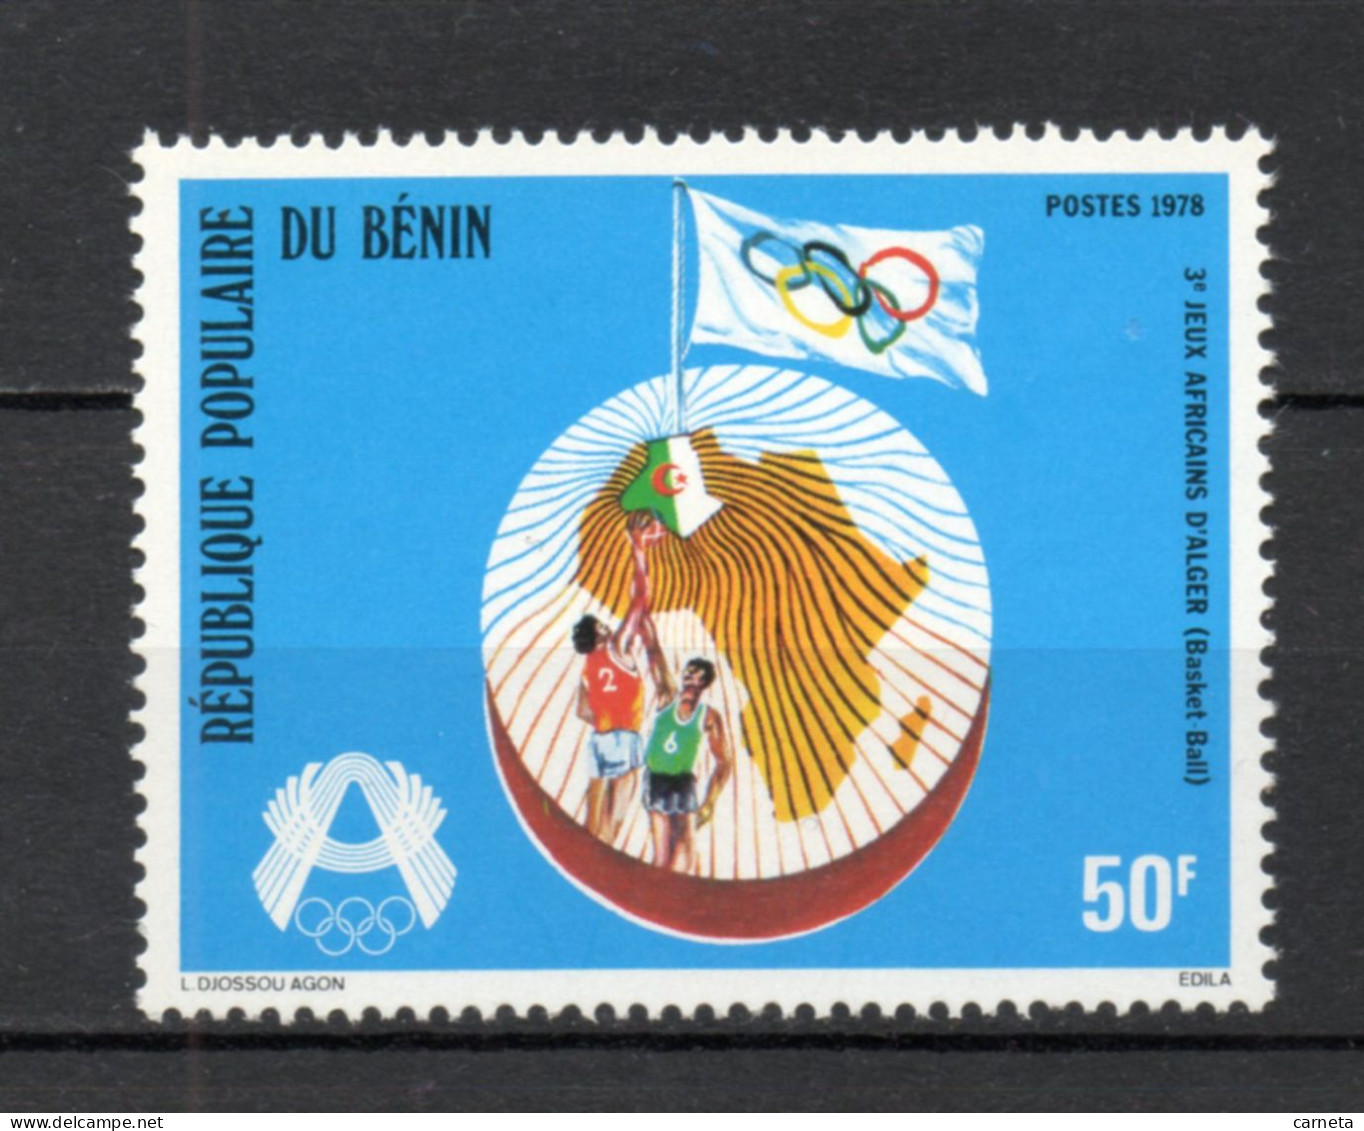 BENIN   N° 415  NEUF SANS CHARNIERE  COTE 0.70€   SPORT BASKET BALL - Benin - Dahomey (1960-...)